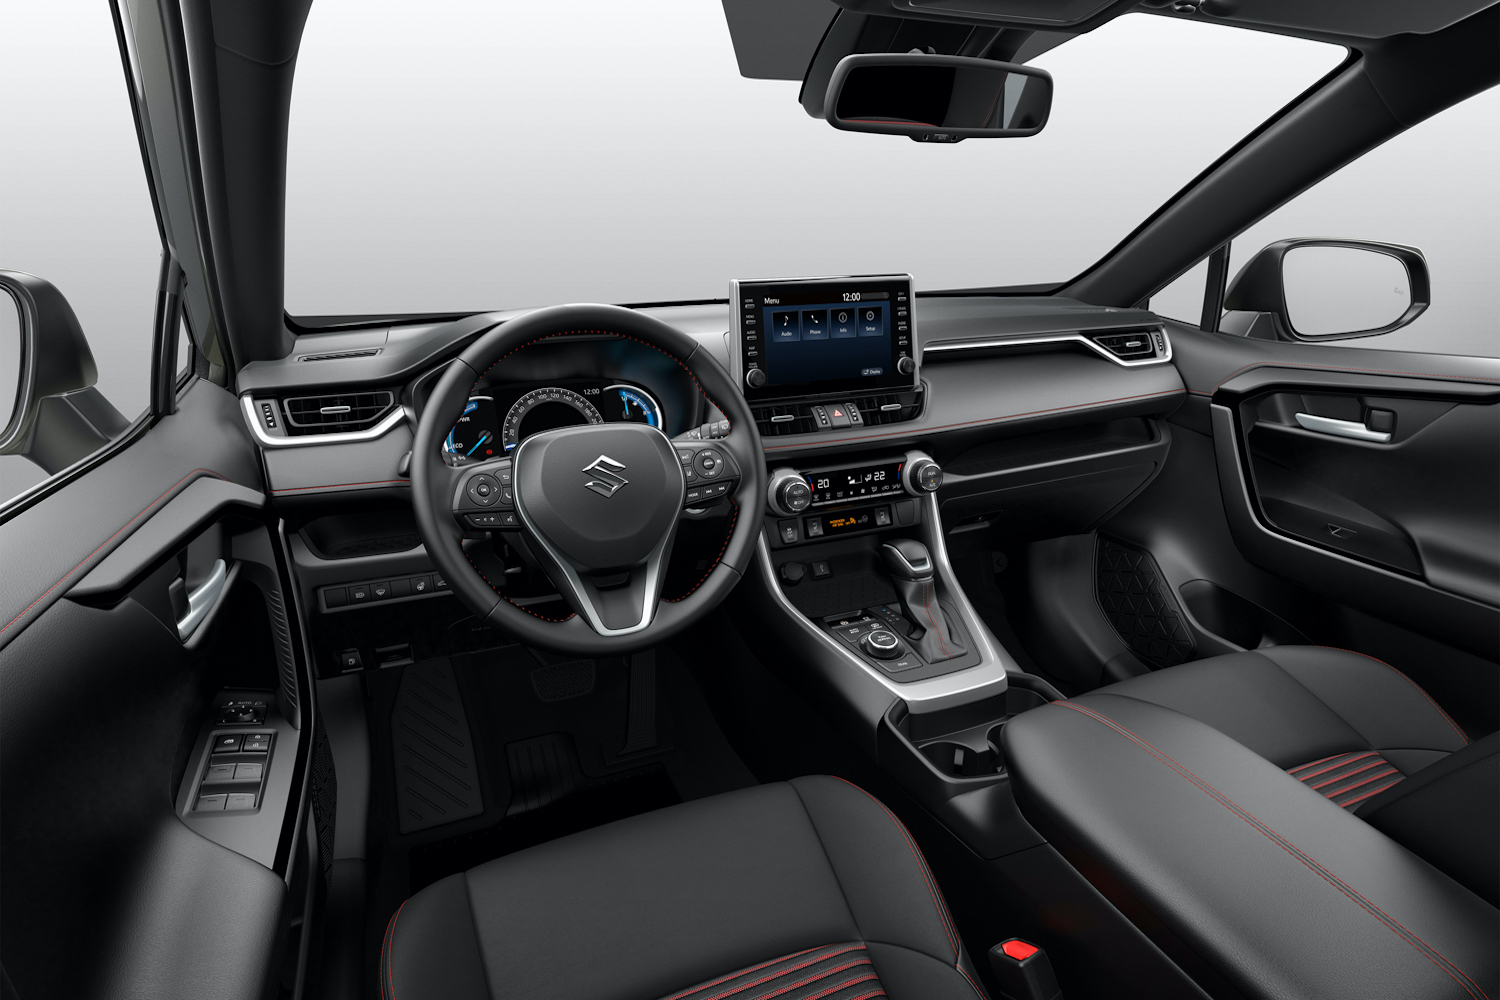 Suzuki ACross debuts plug-in hybrid system